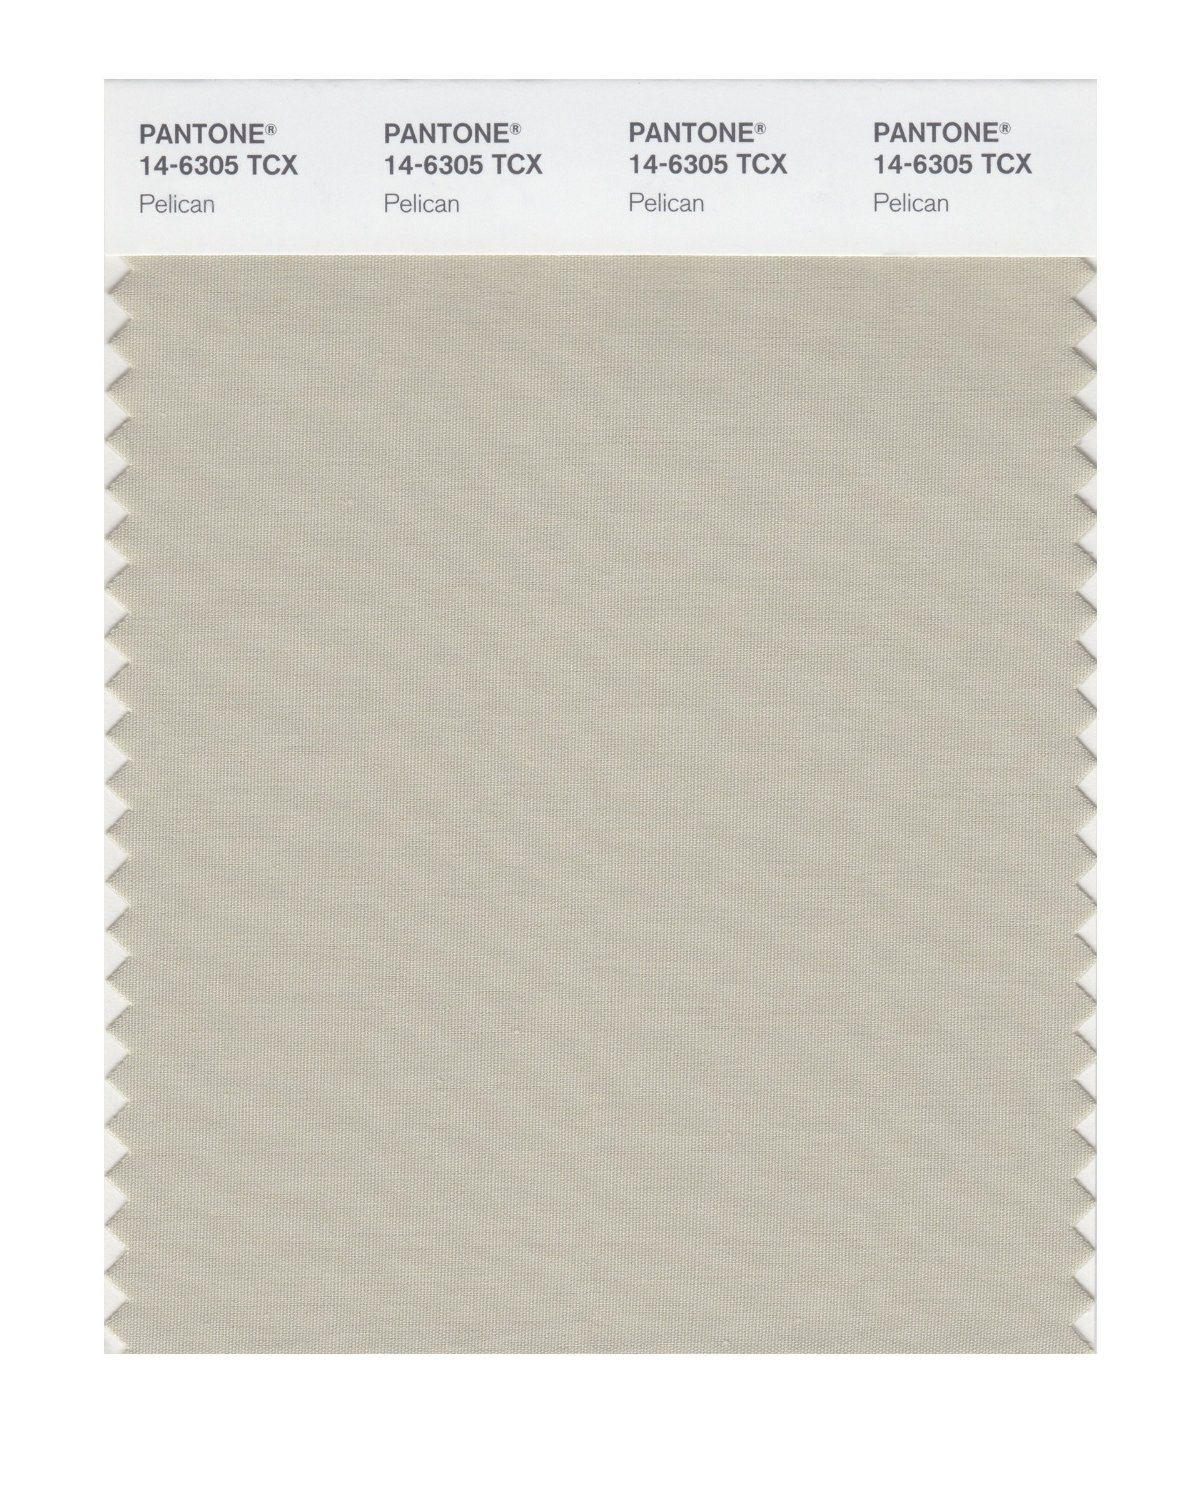 Pantone Cotton Swatch 14-6305 Pelican